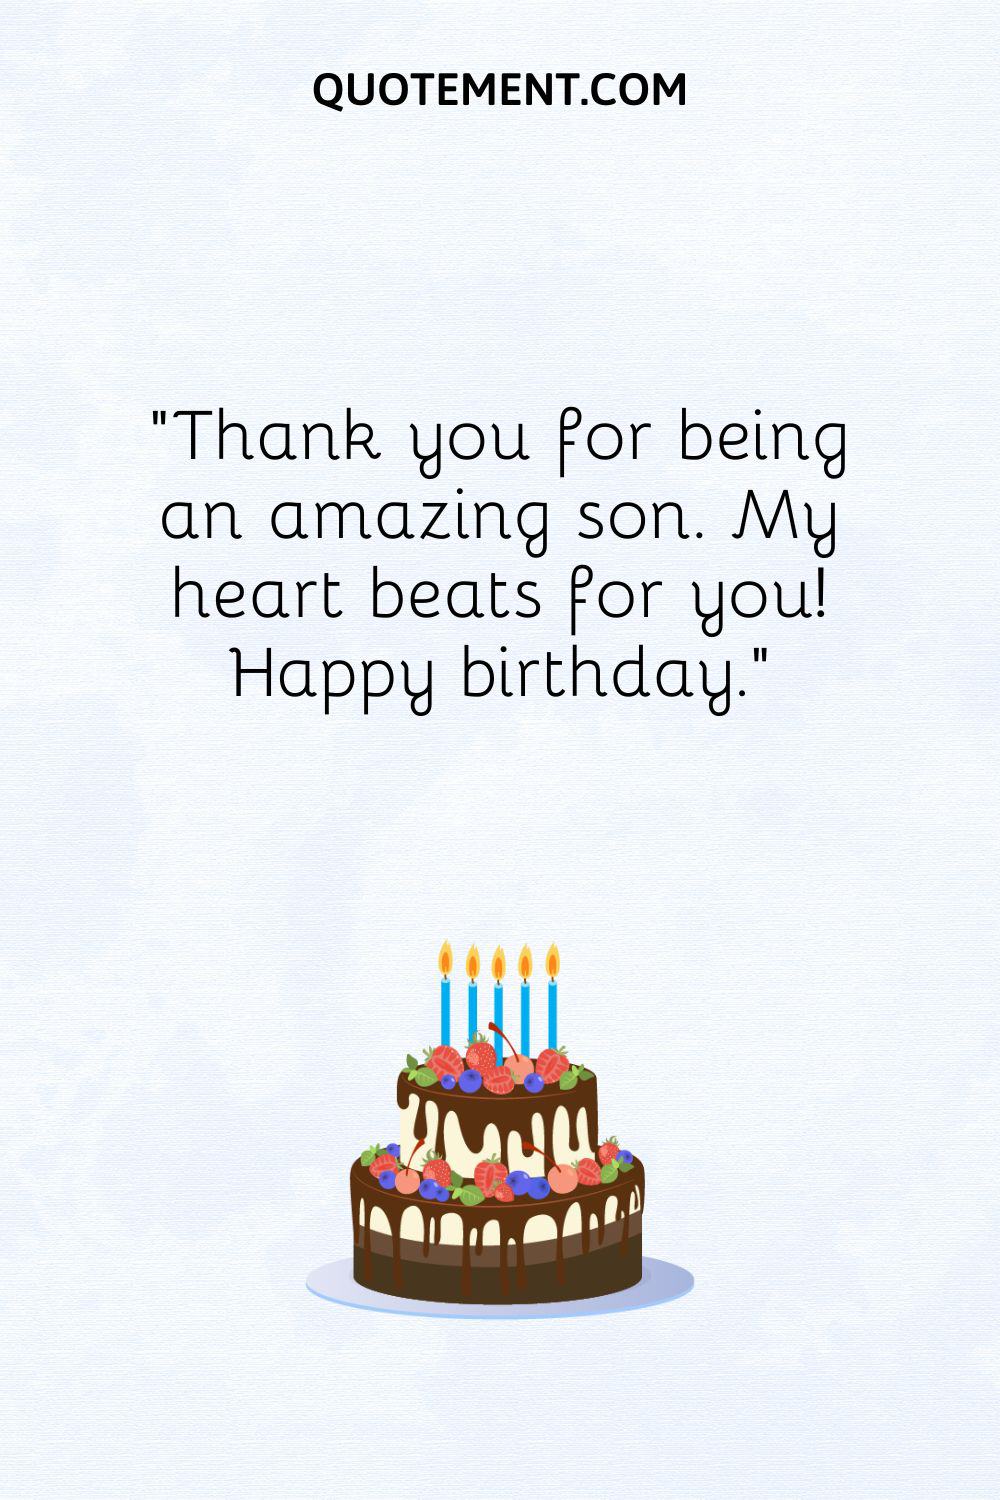 birthday cake illustration representing birthday wish for son from mom